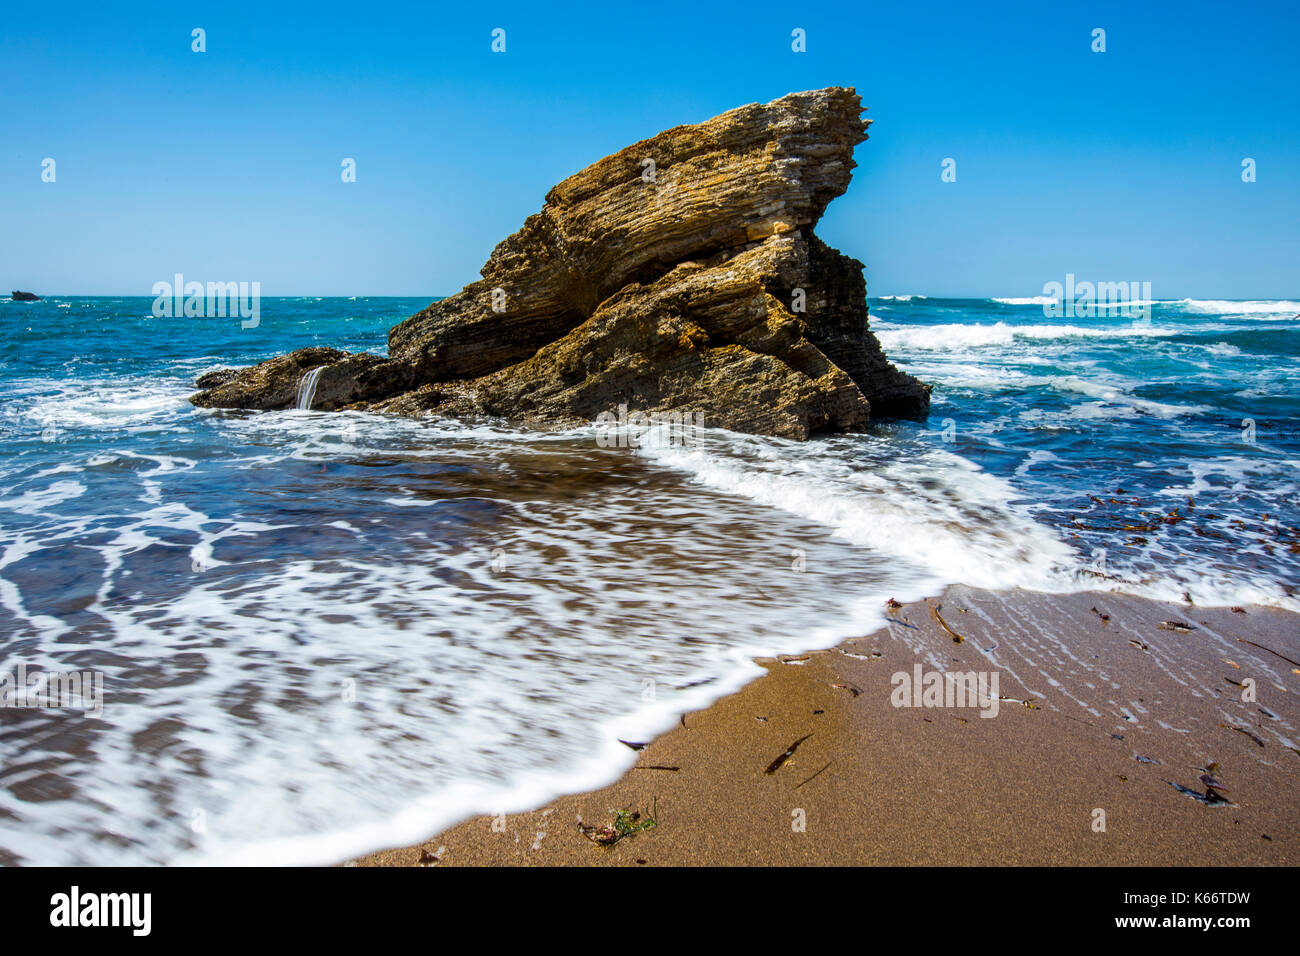 Waves splashing on rock at ocean beach Stock Photo